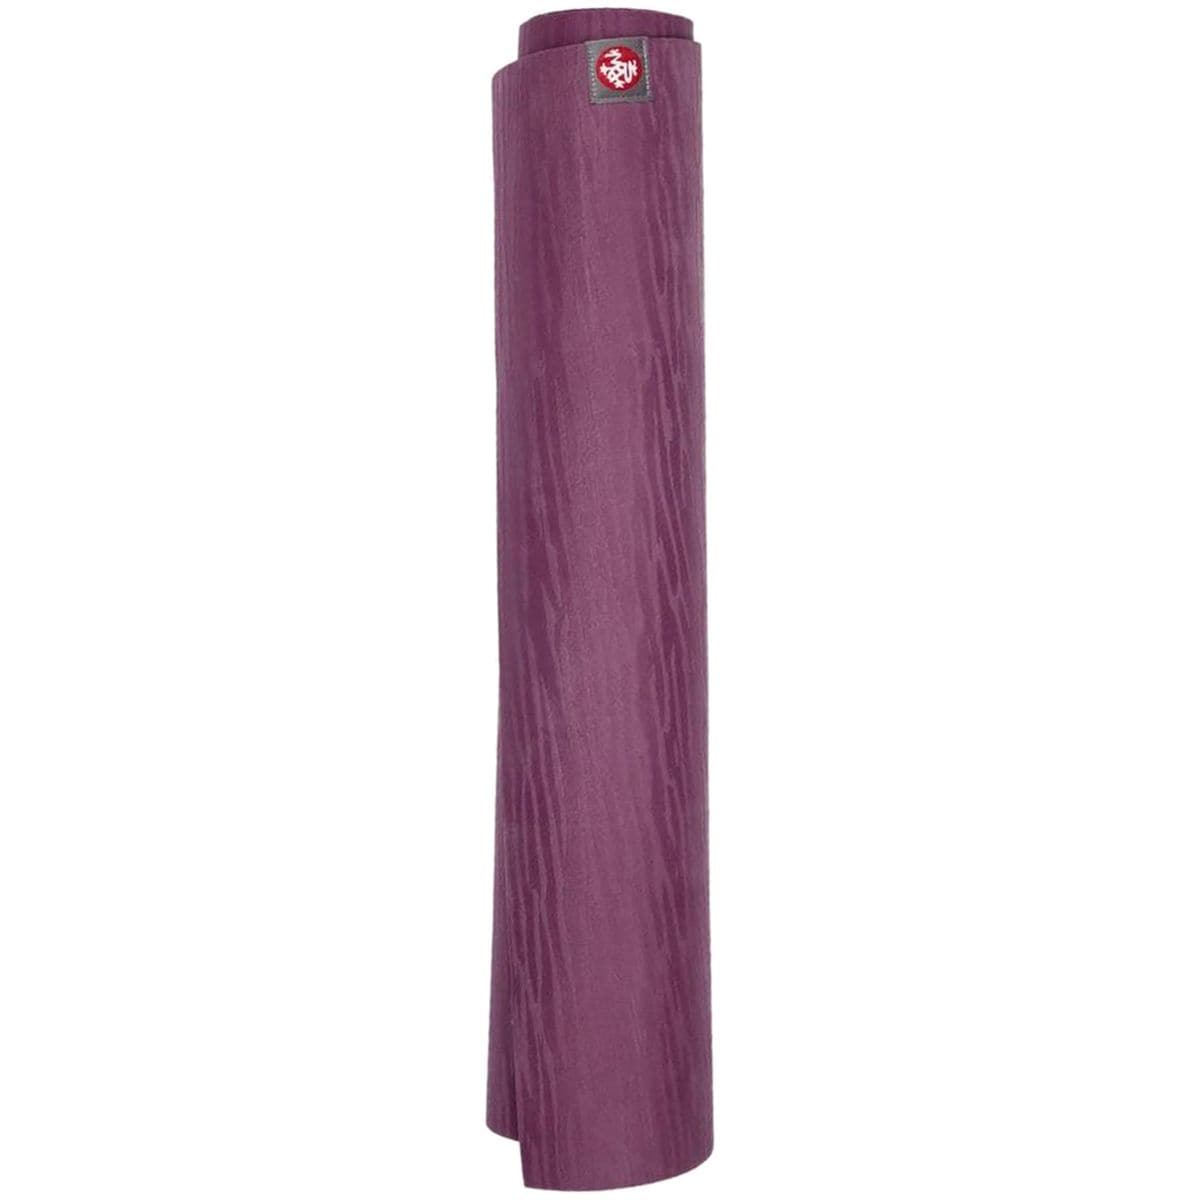  Manduka eKO Lite 4mm Yoga Mat - Yoga